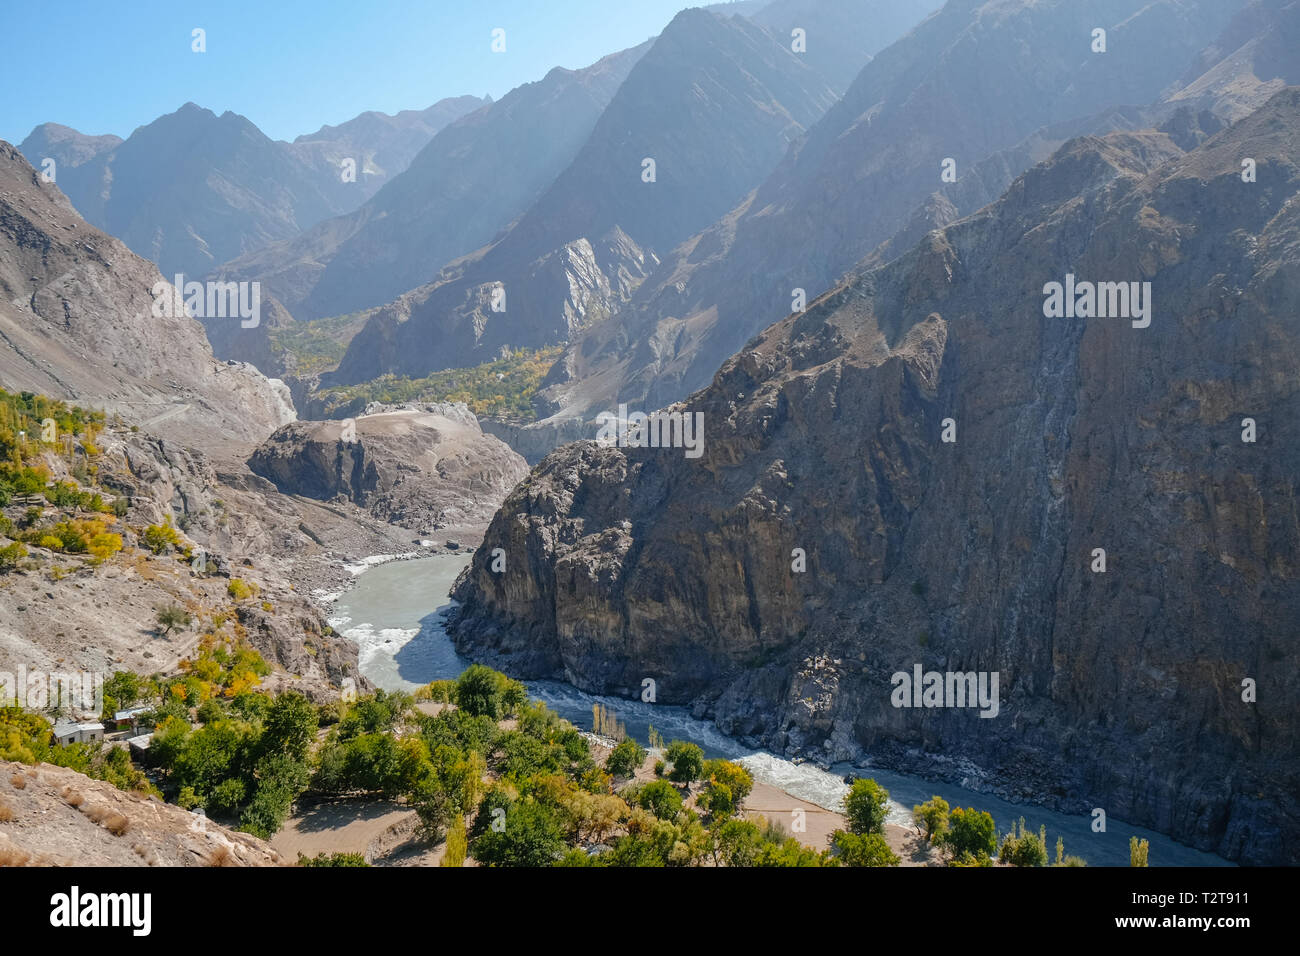 Indus river flowing through mountains along the Karakoram highway. Gilgit Baltistan, Pakistan. Stock Photo